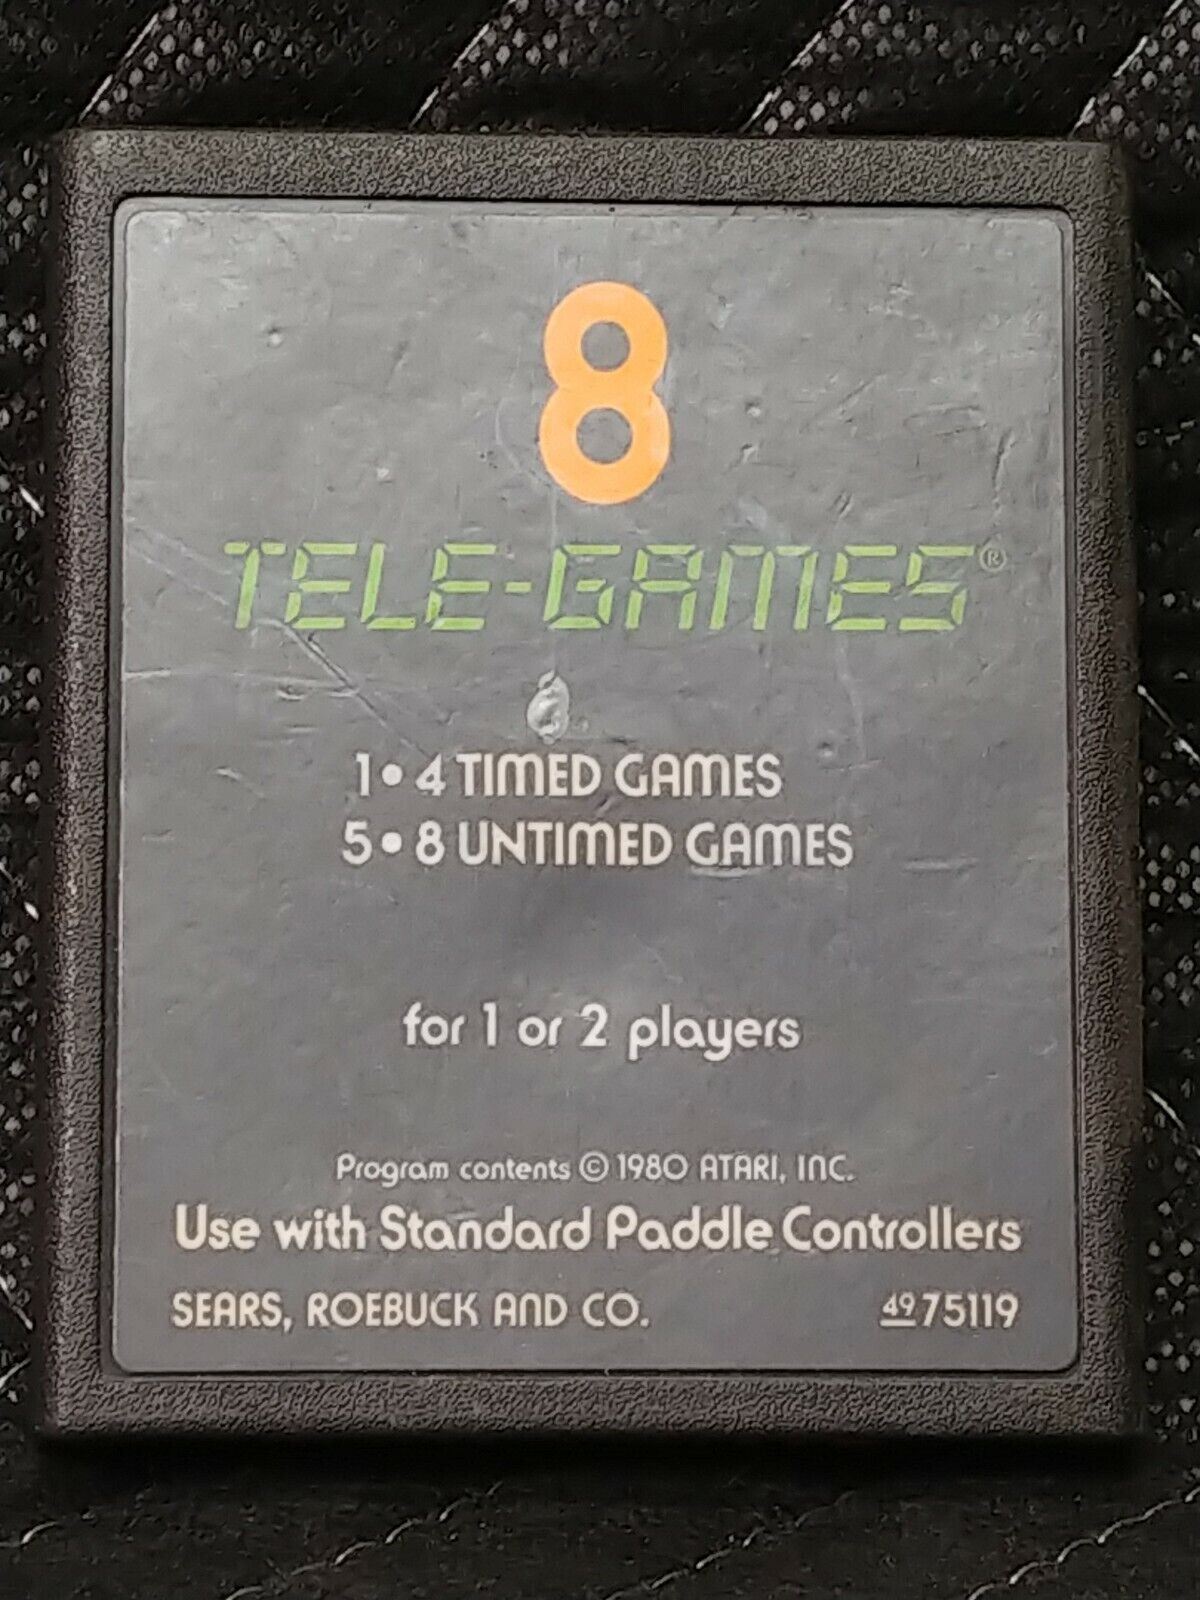 8 Tele-Games Night Driver Atari 2600 Sears Text Label Game